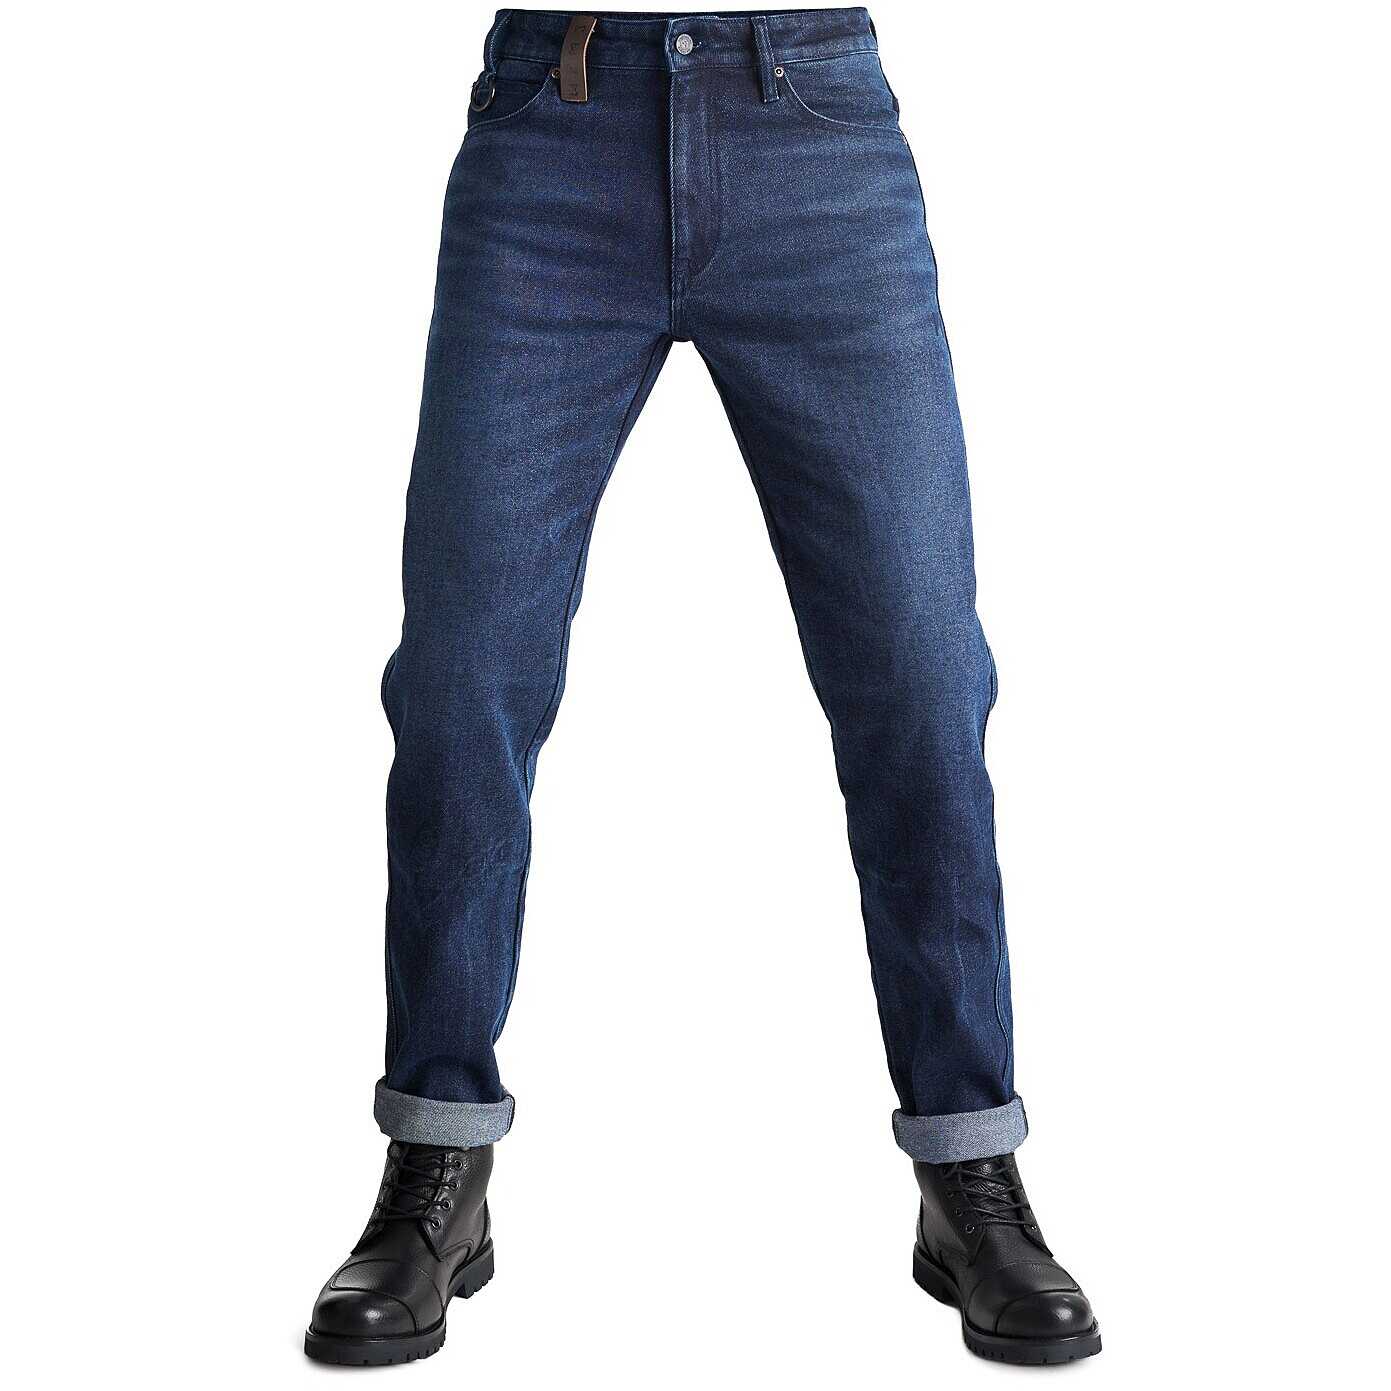 Pando Moto Men's Slim-Fit Motorcycle Jeans ARNIE SLIM BLUE - L34 For Sale  Online 